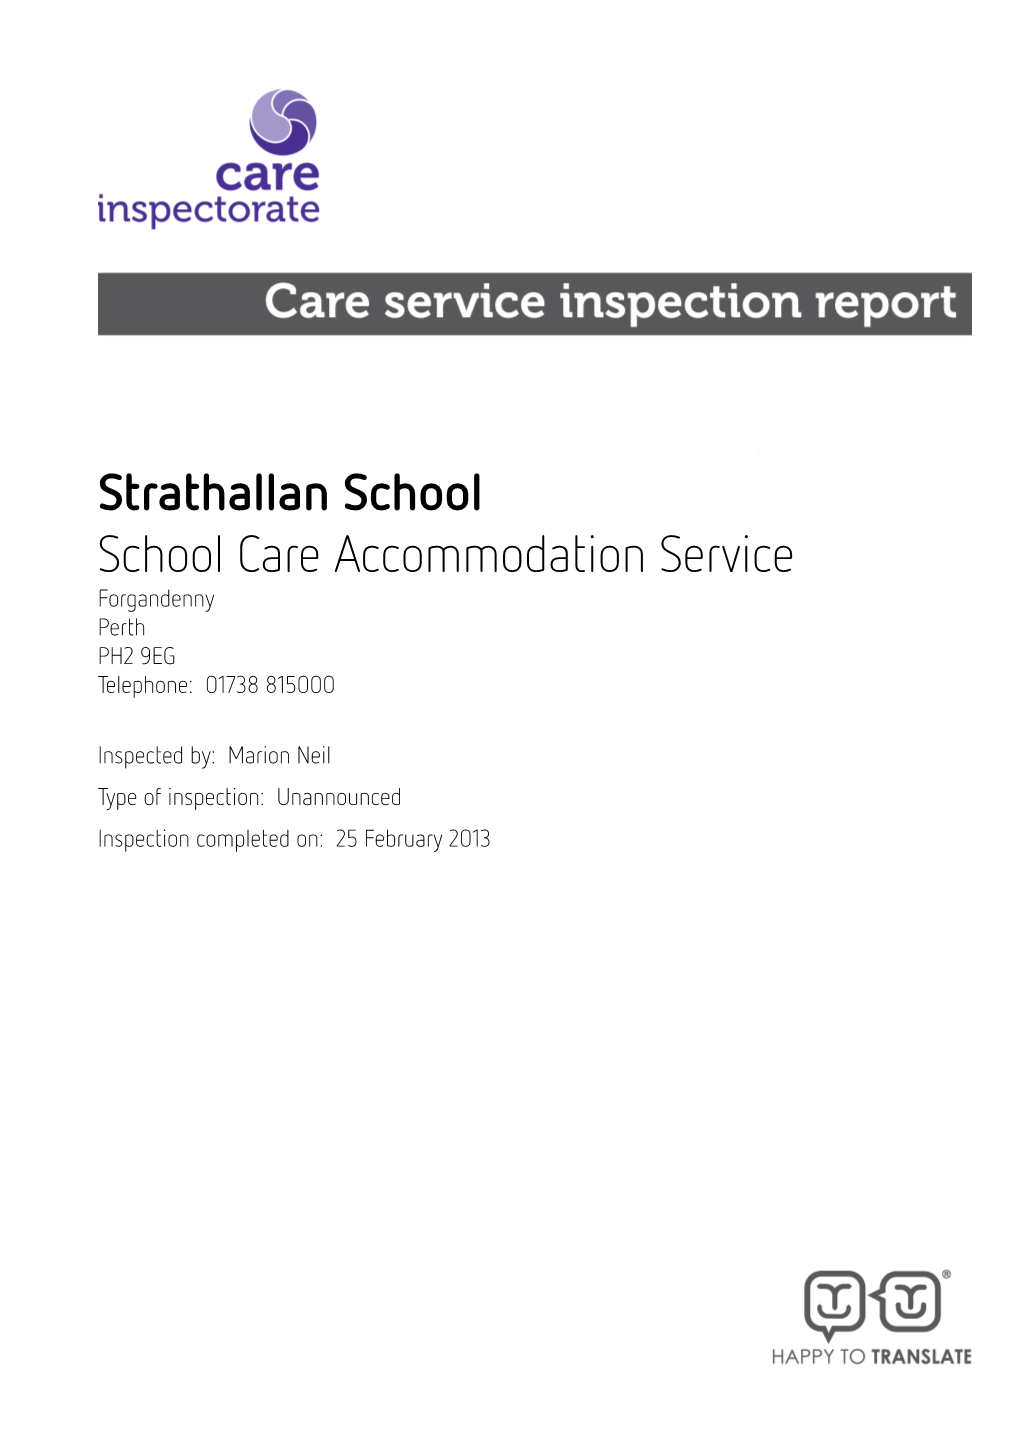 Strathallan School School Care Accommodation Service Forgandenny Perth PH2 9EG Telephone: 01738 815000